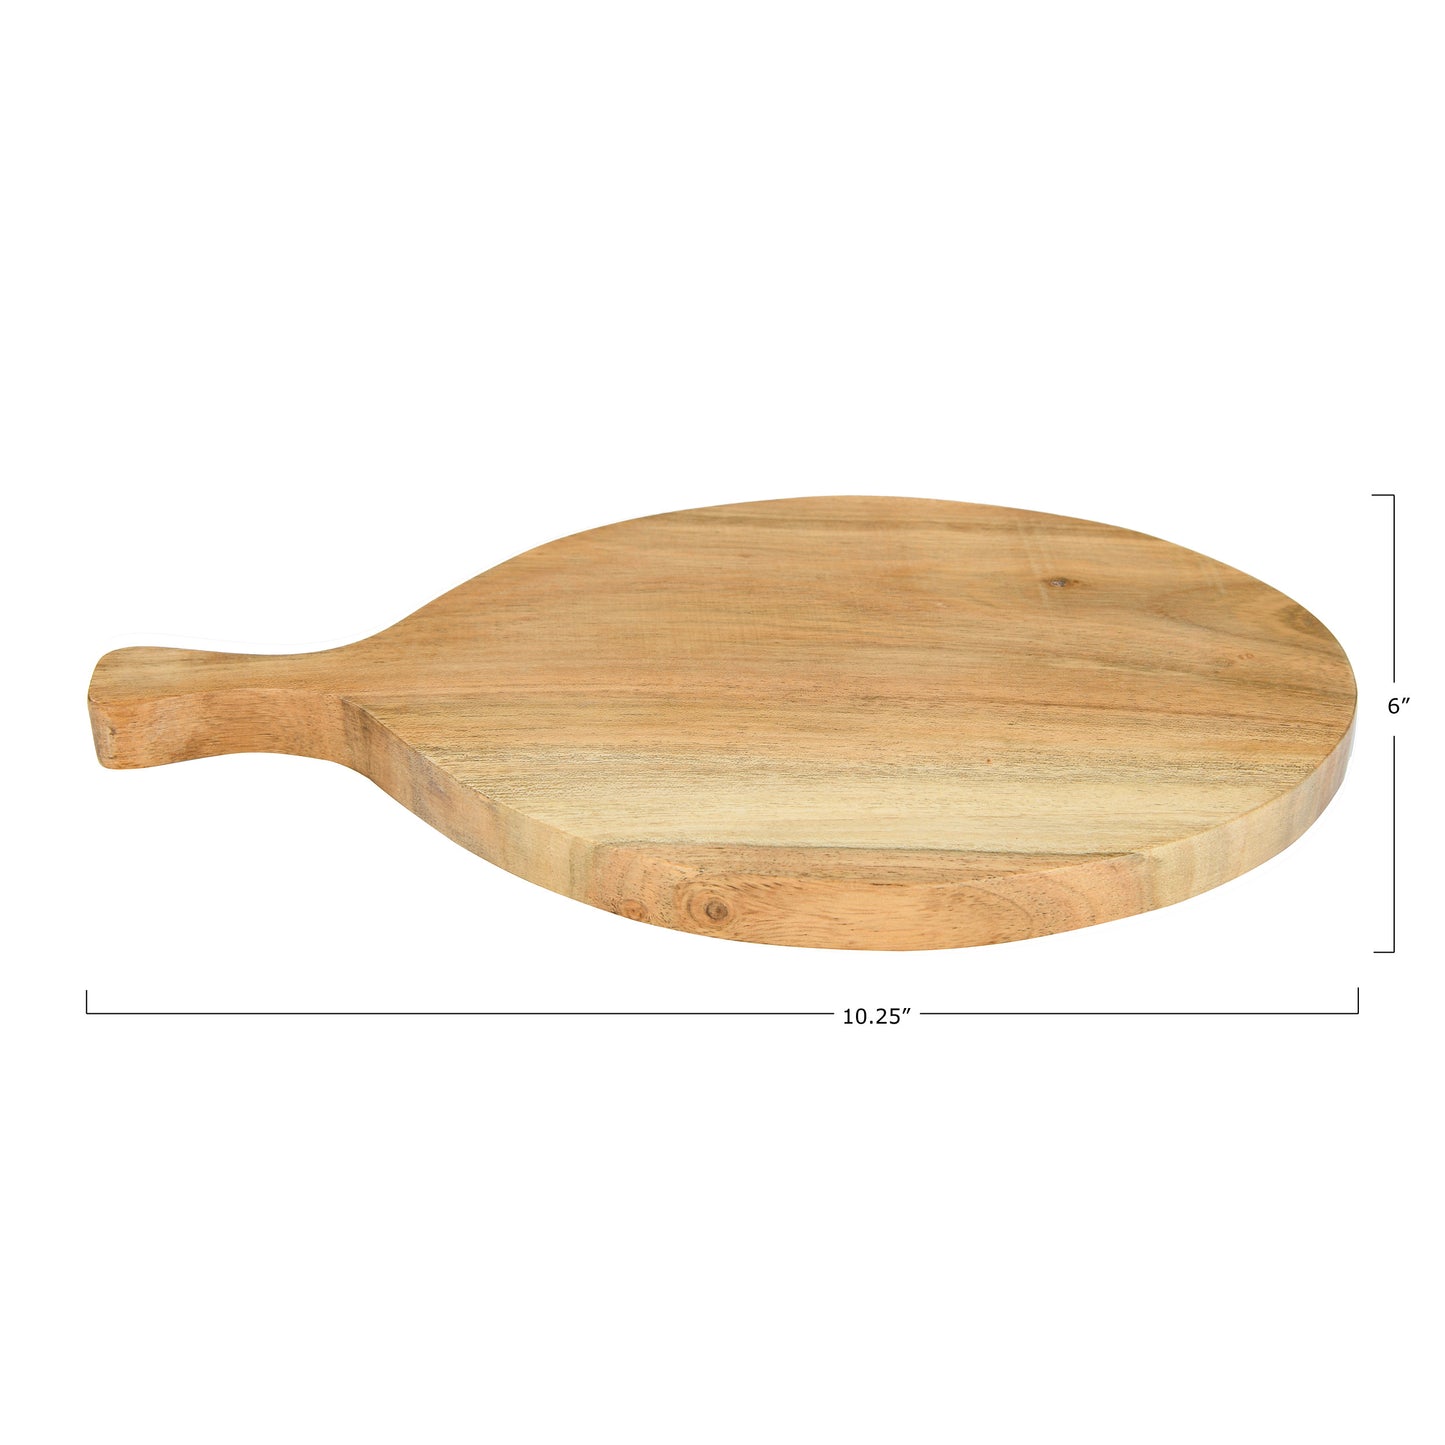 Acacia Wood Cheese/Cutting Board 10.25"L x 6"W